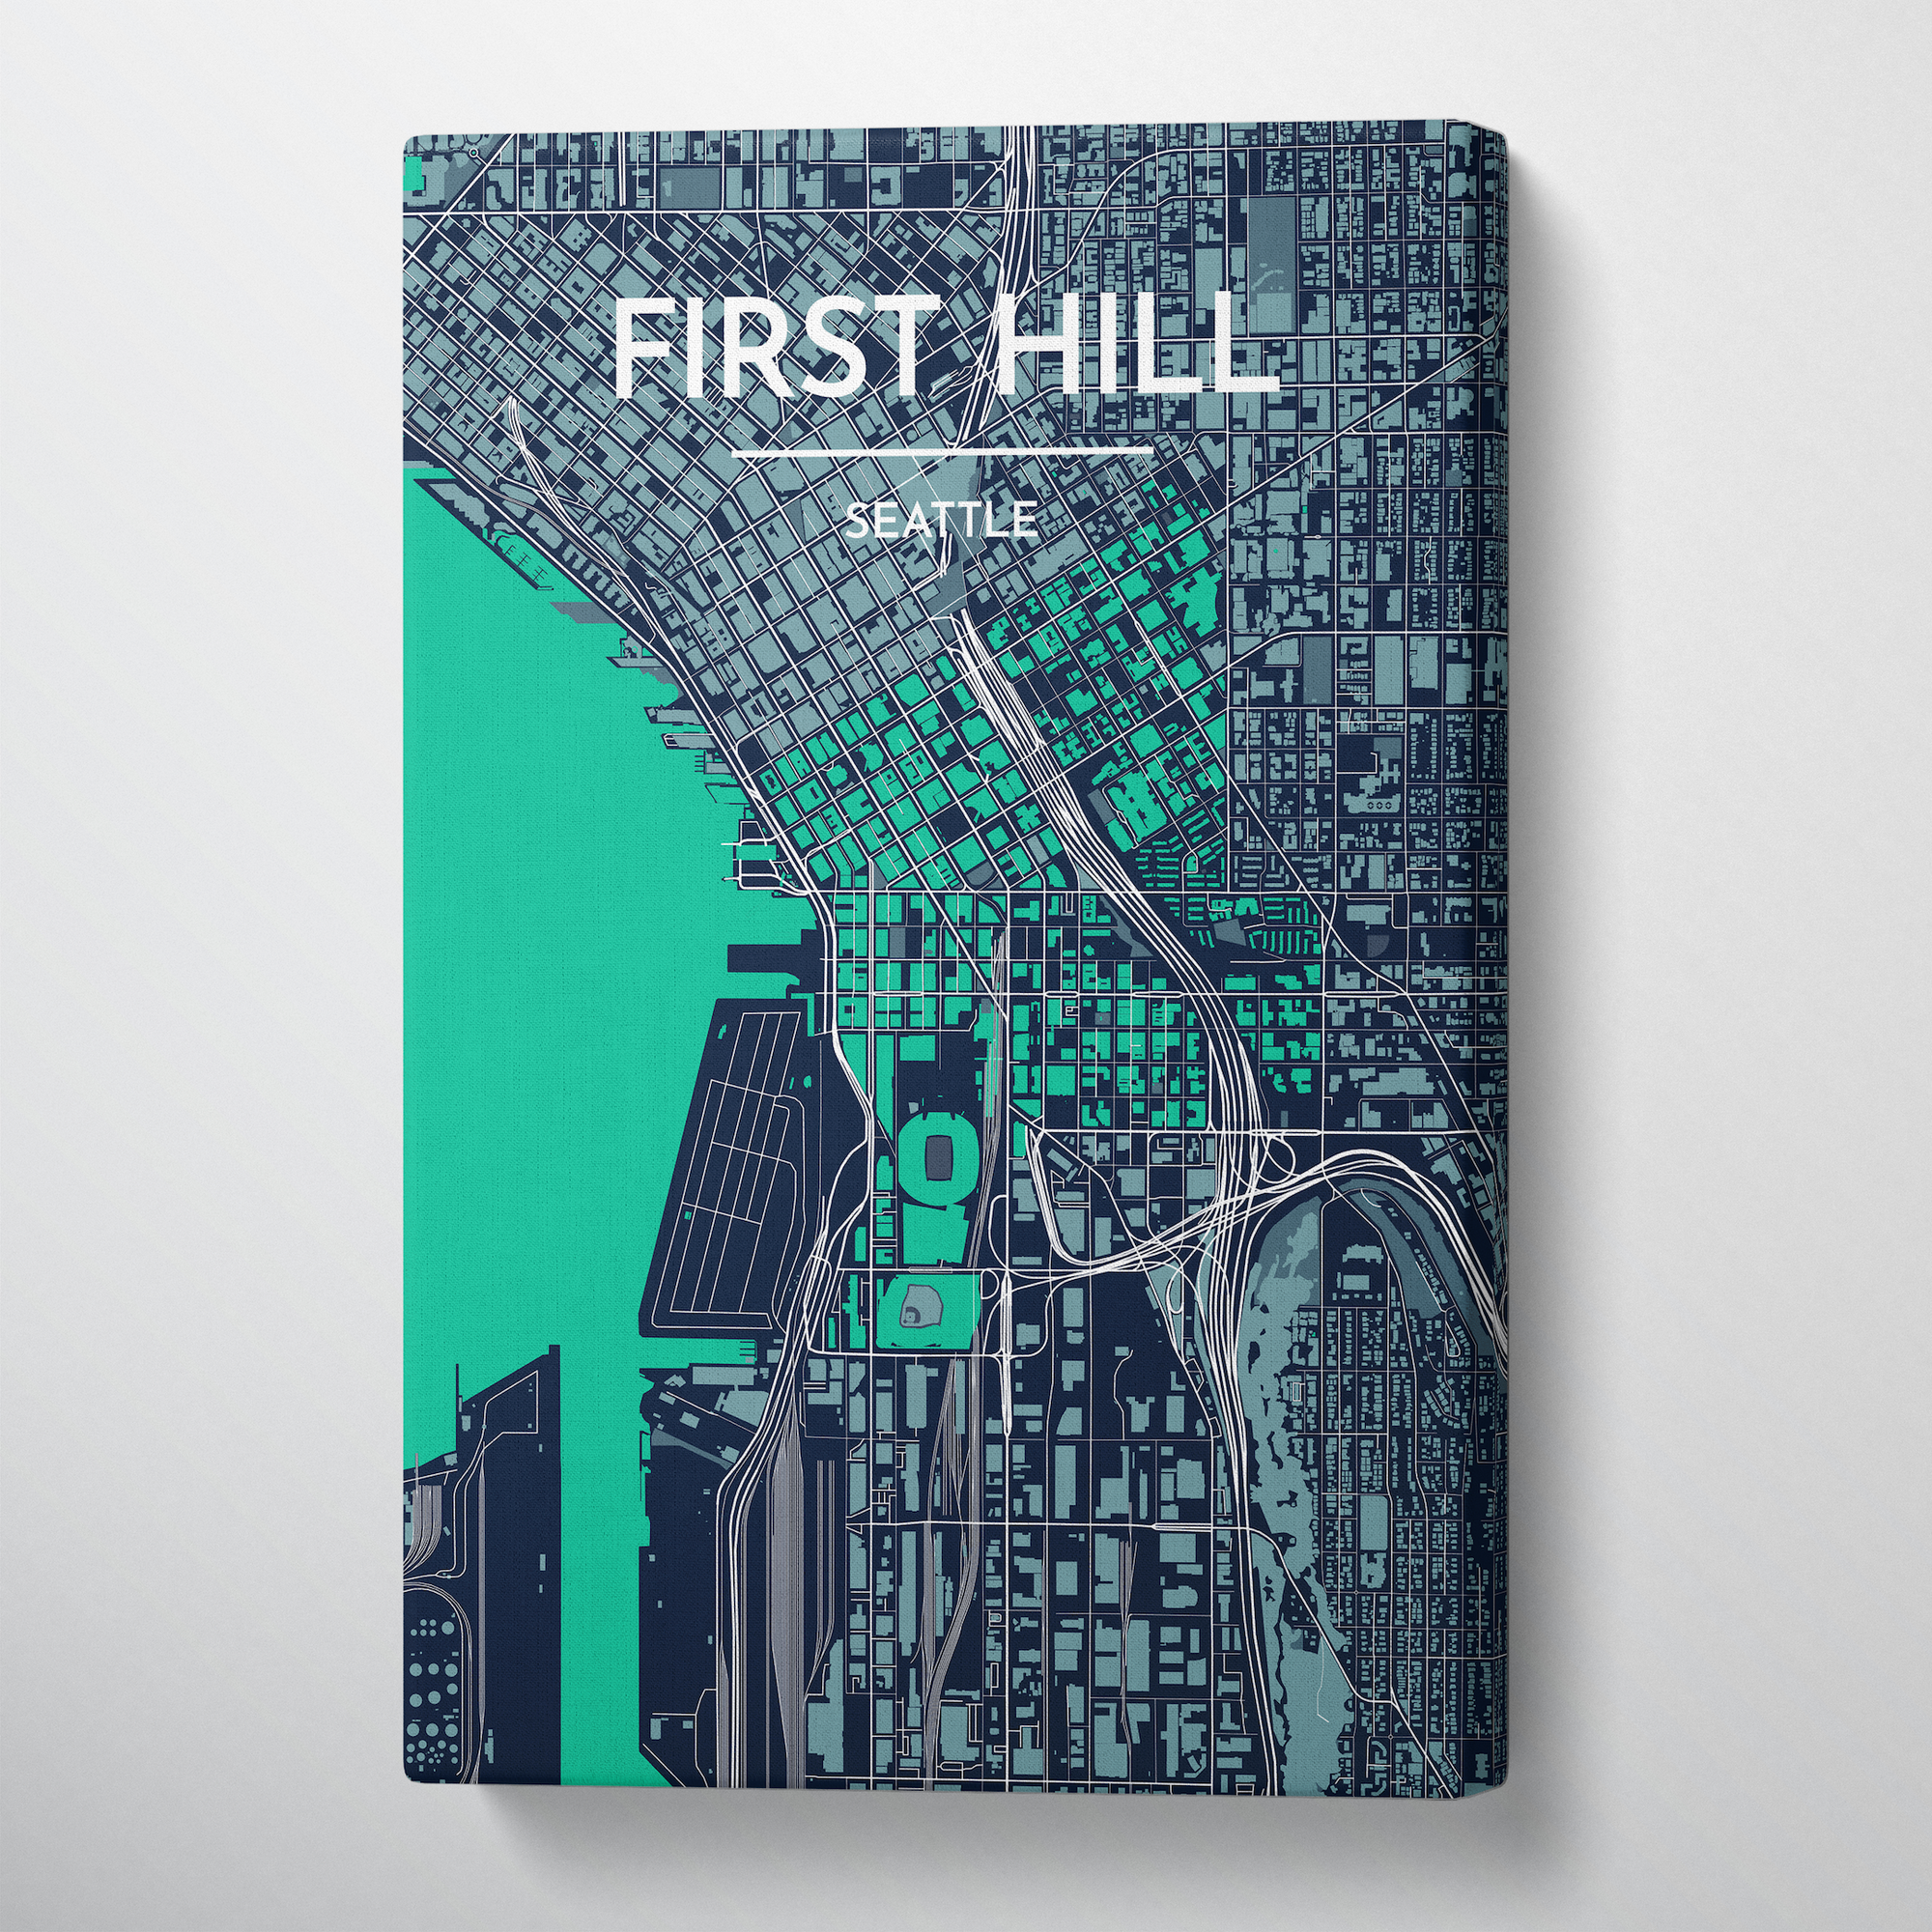 Seattle First Hill Neighbourhood City Map Canvas Wrap - Point Two Design